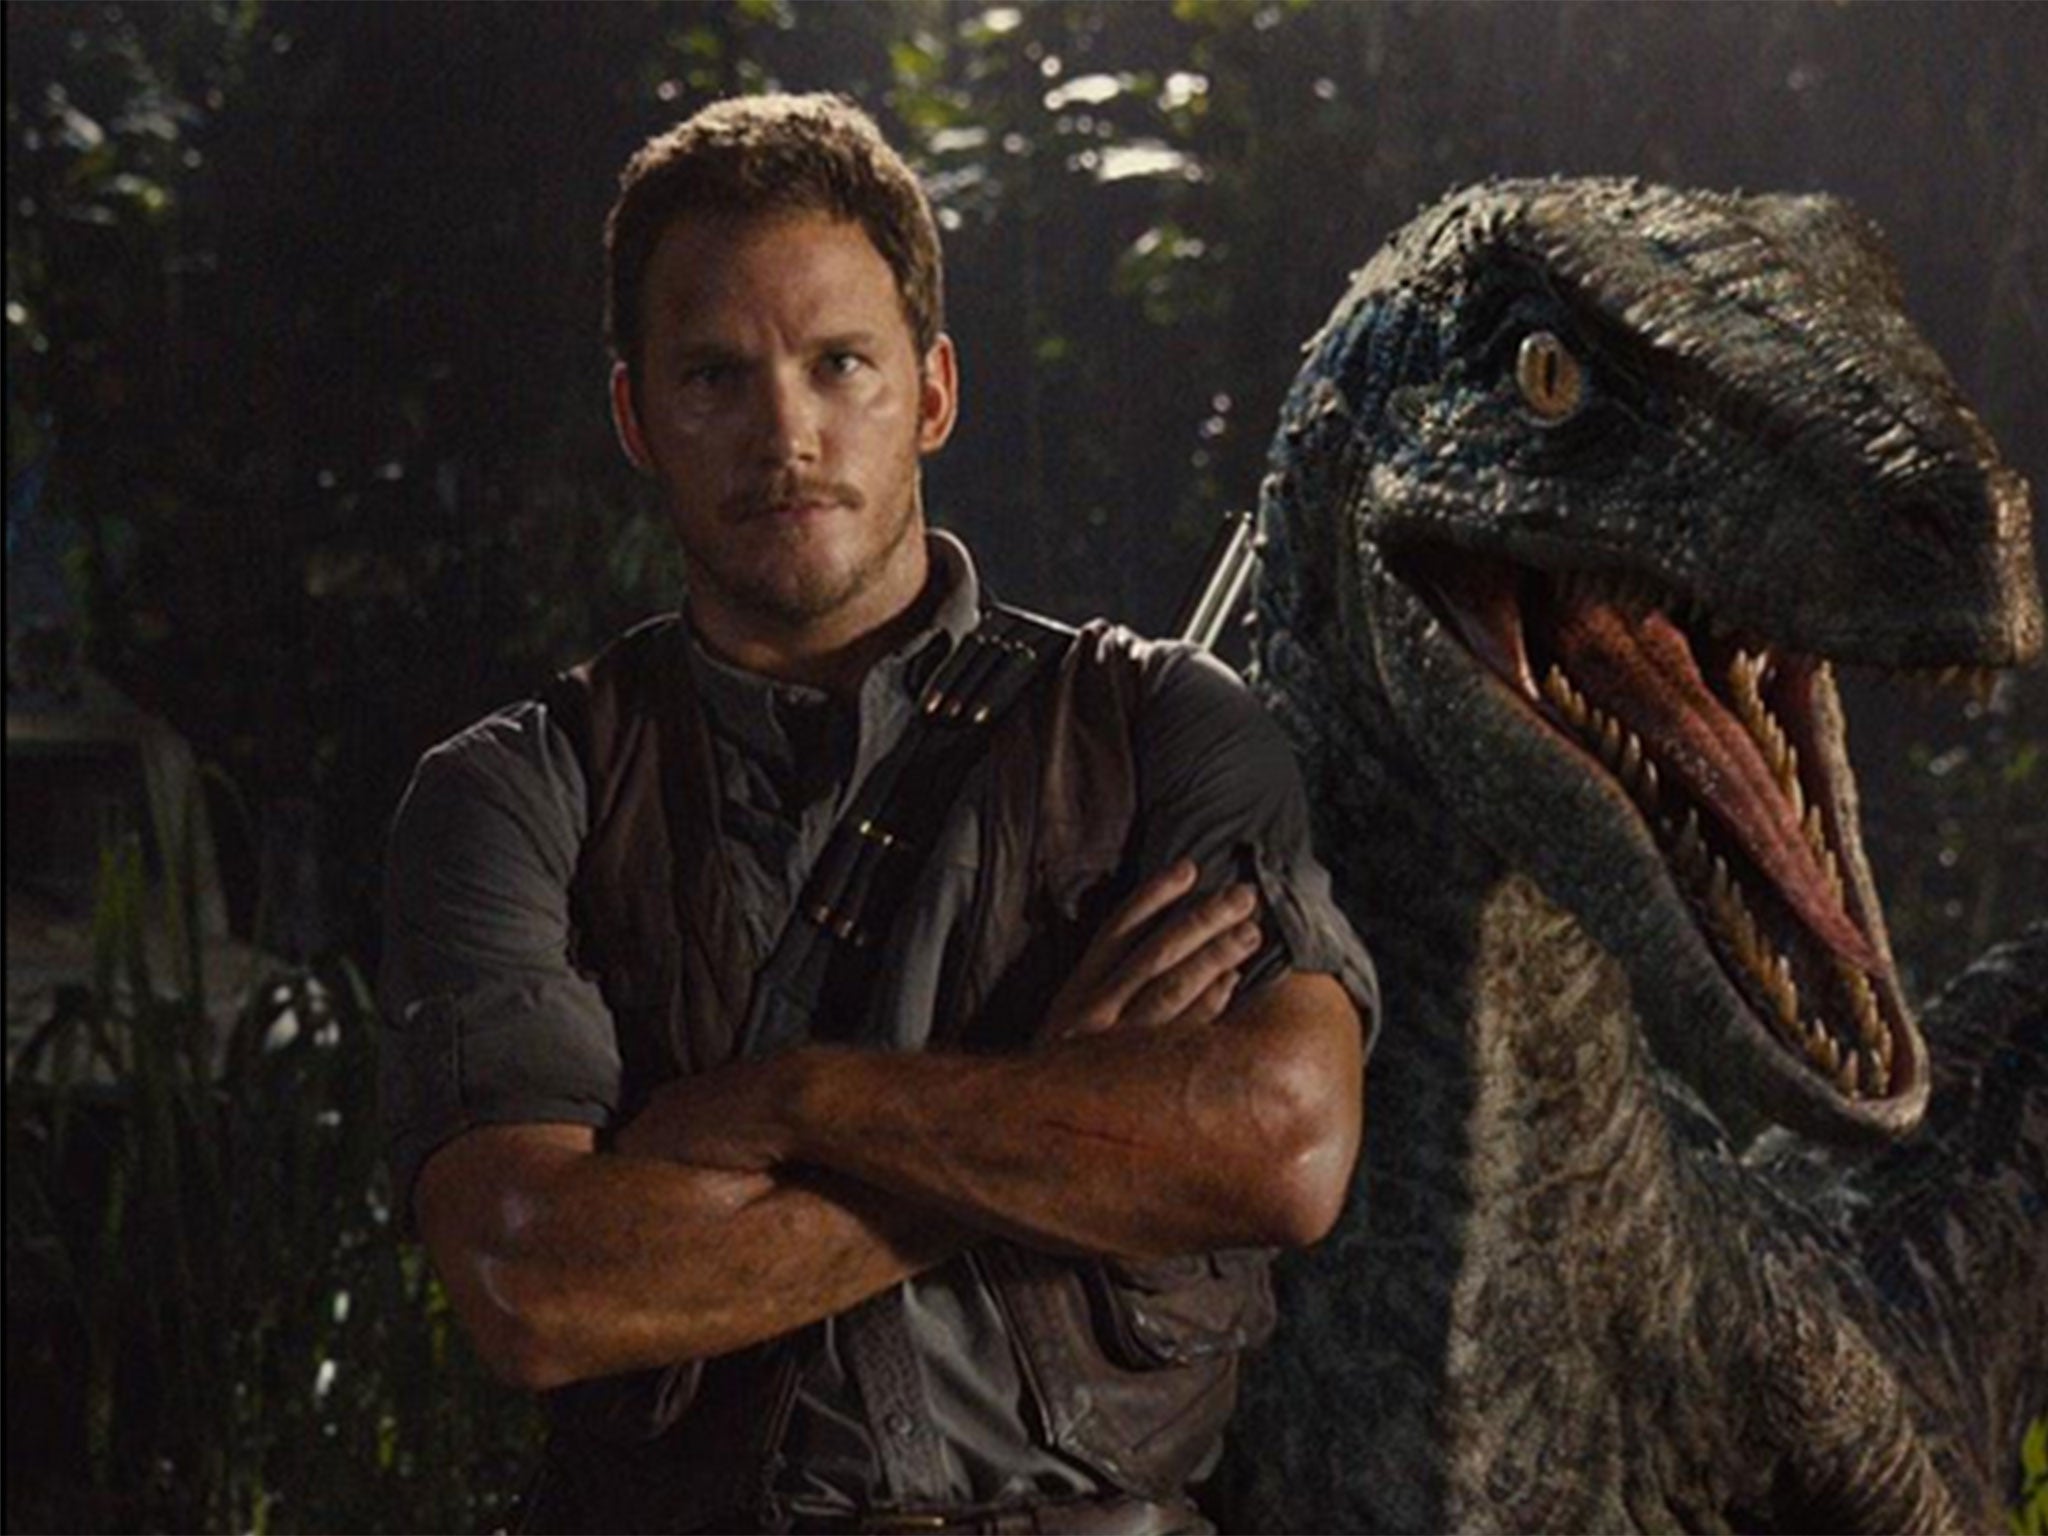 Chris Pratt with a raptor in a new Jurassic World promo shot